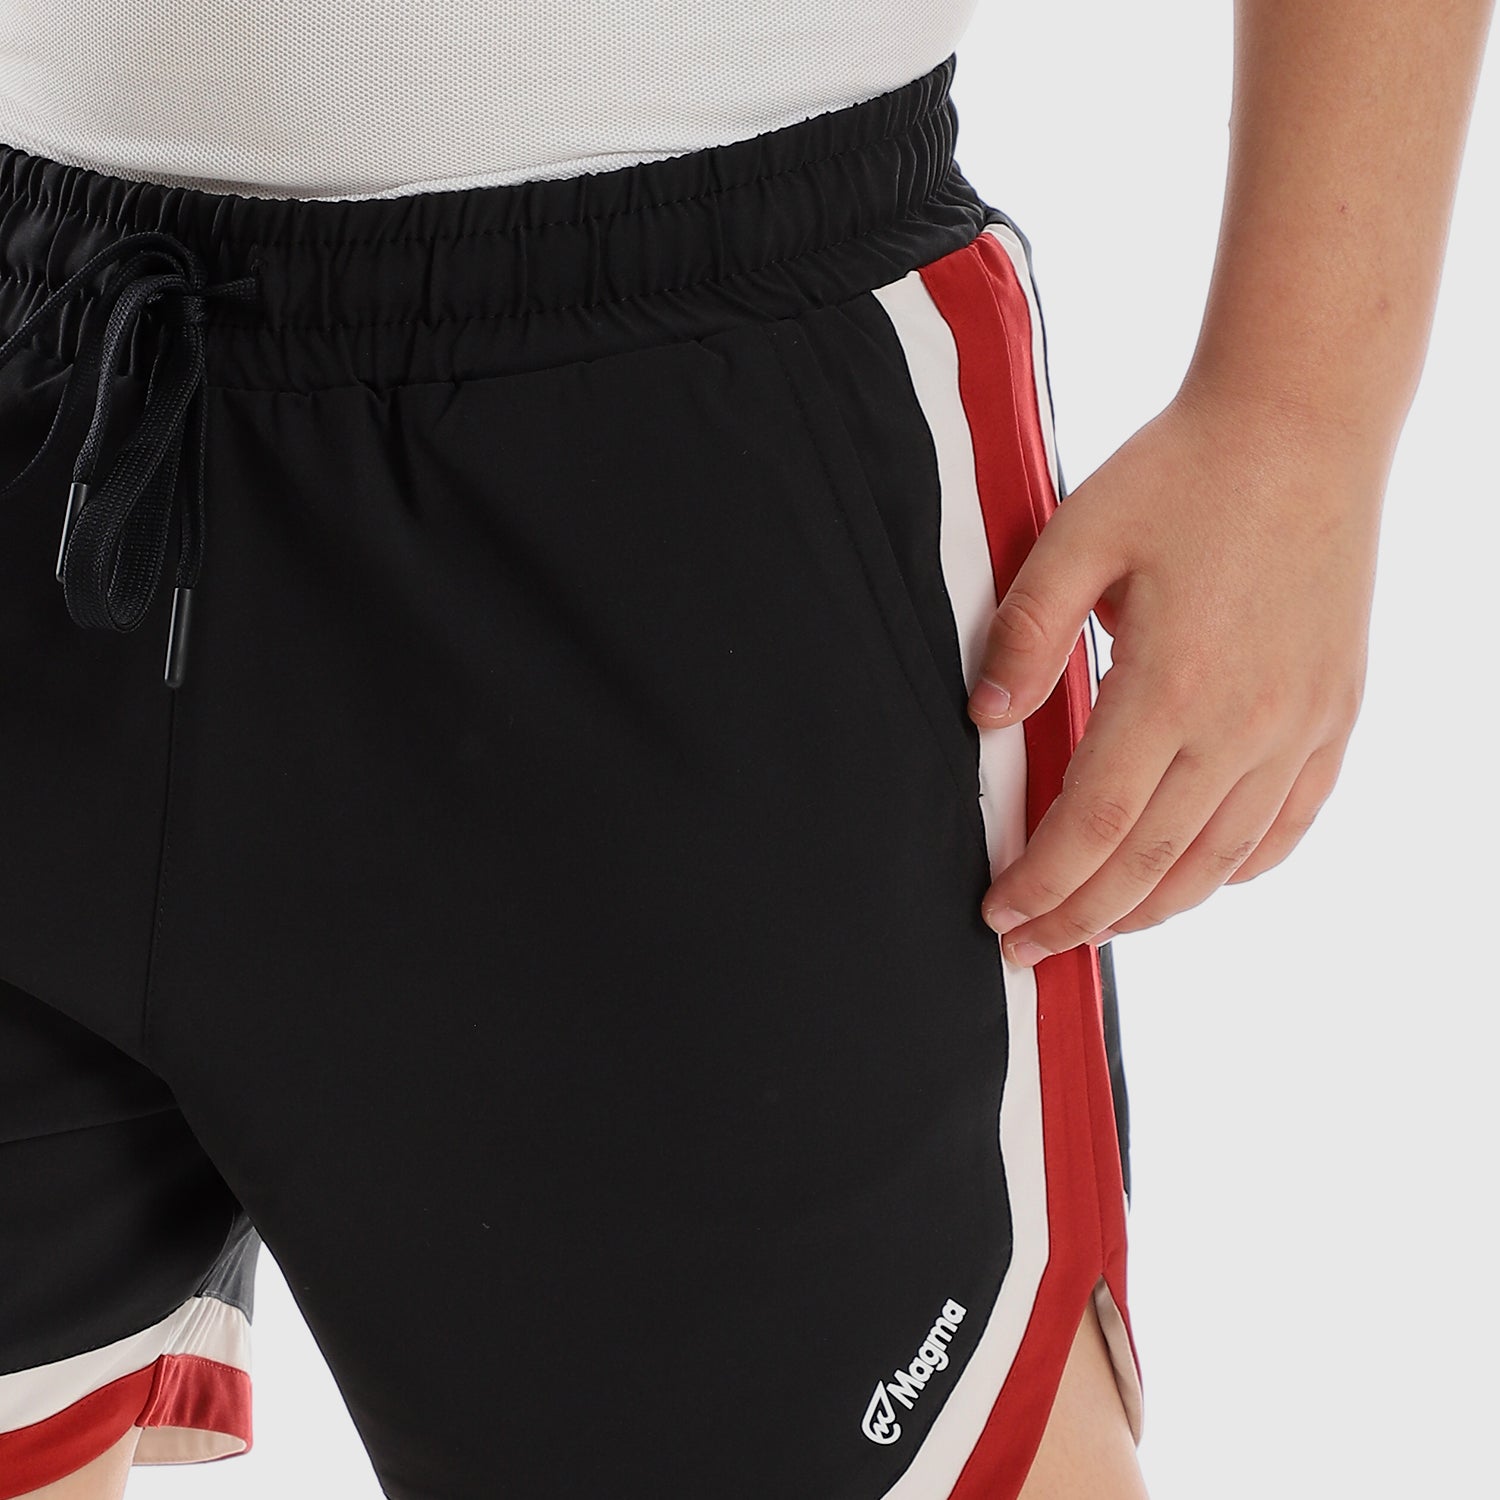 Boys Tri-Tone Comfy Slip On Sportive Shorts - Black, White & Red - Sporty Pro